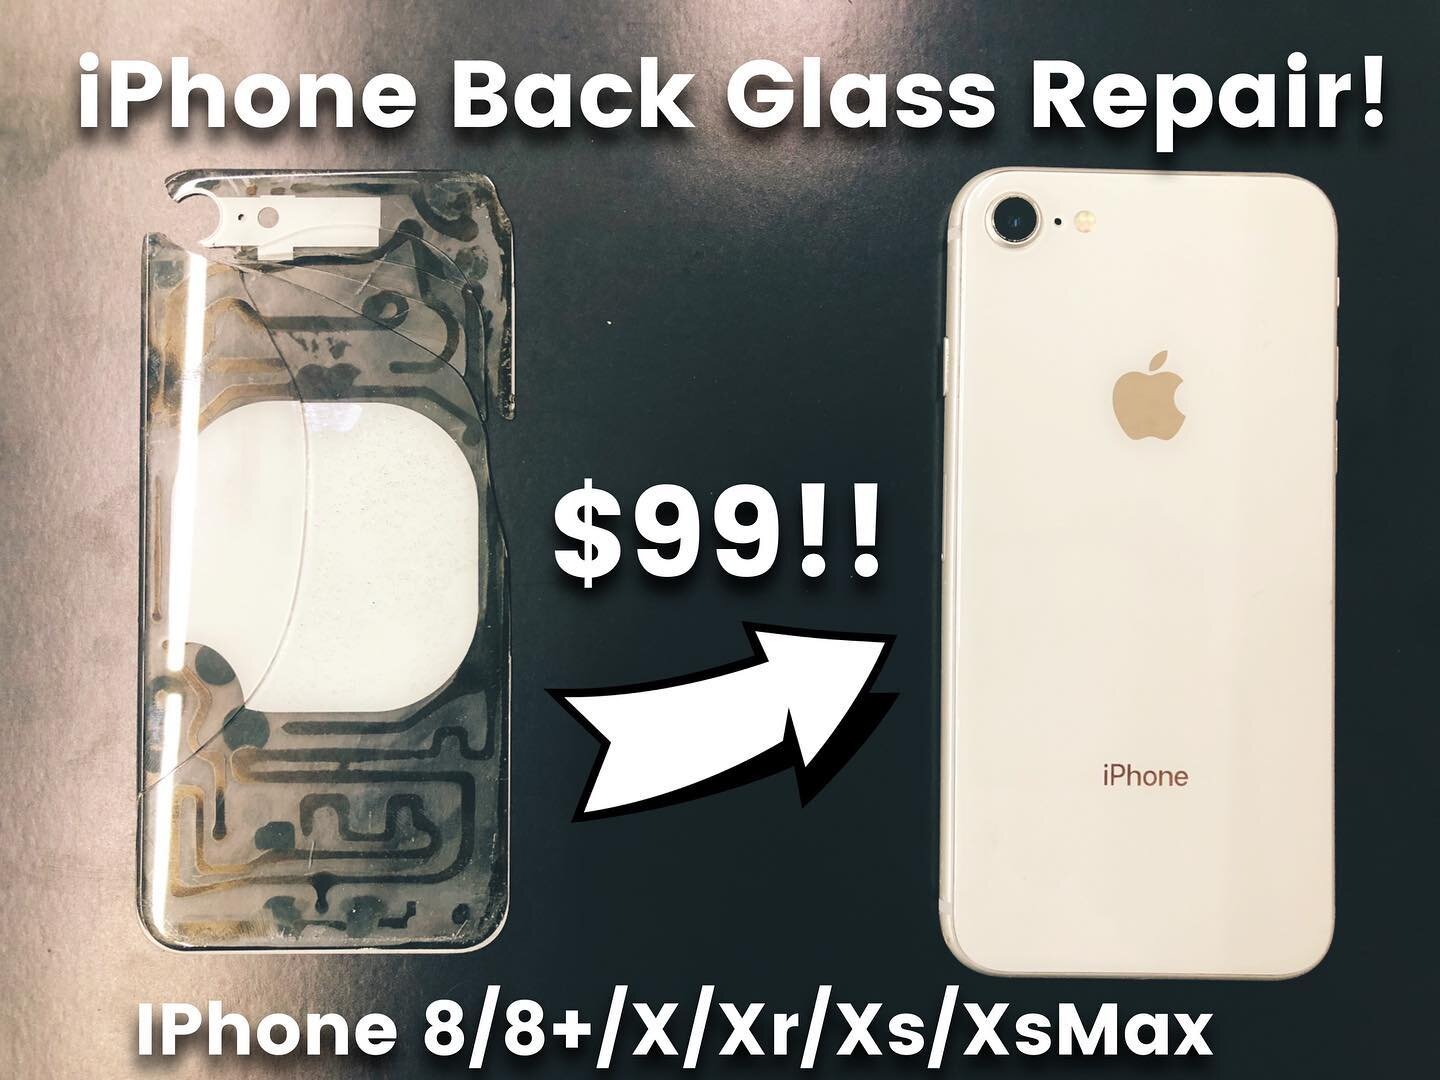 iPhone 8/8+/X/Xr/Xs/XsMax Back Glass Repair @ $99!! 1 Hour Turn around! #phoneworldatl #atlantacellphonerepair #tuckerga #iphonebackglass